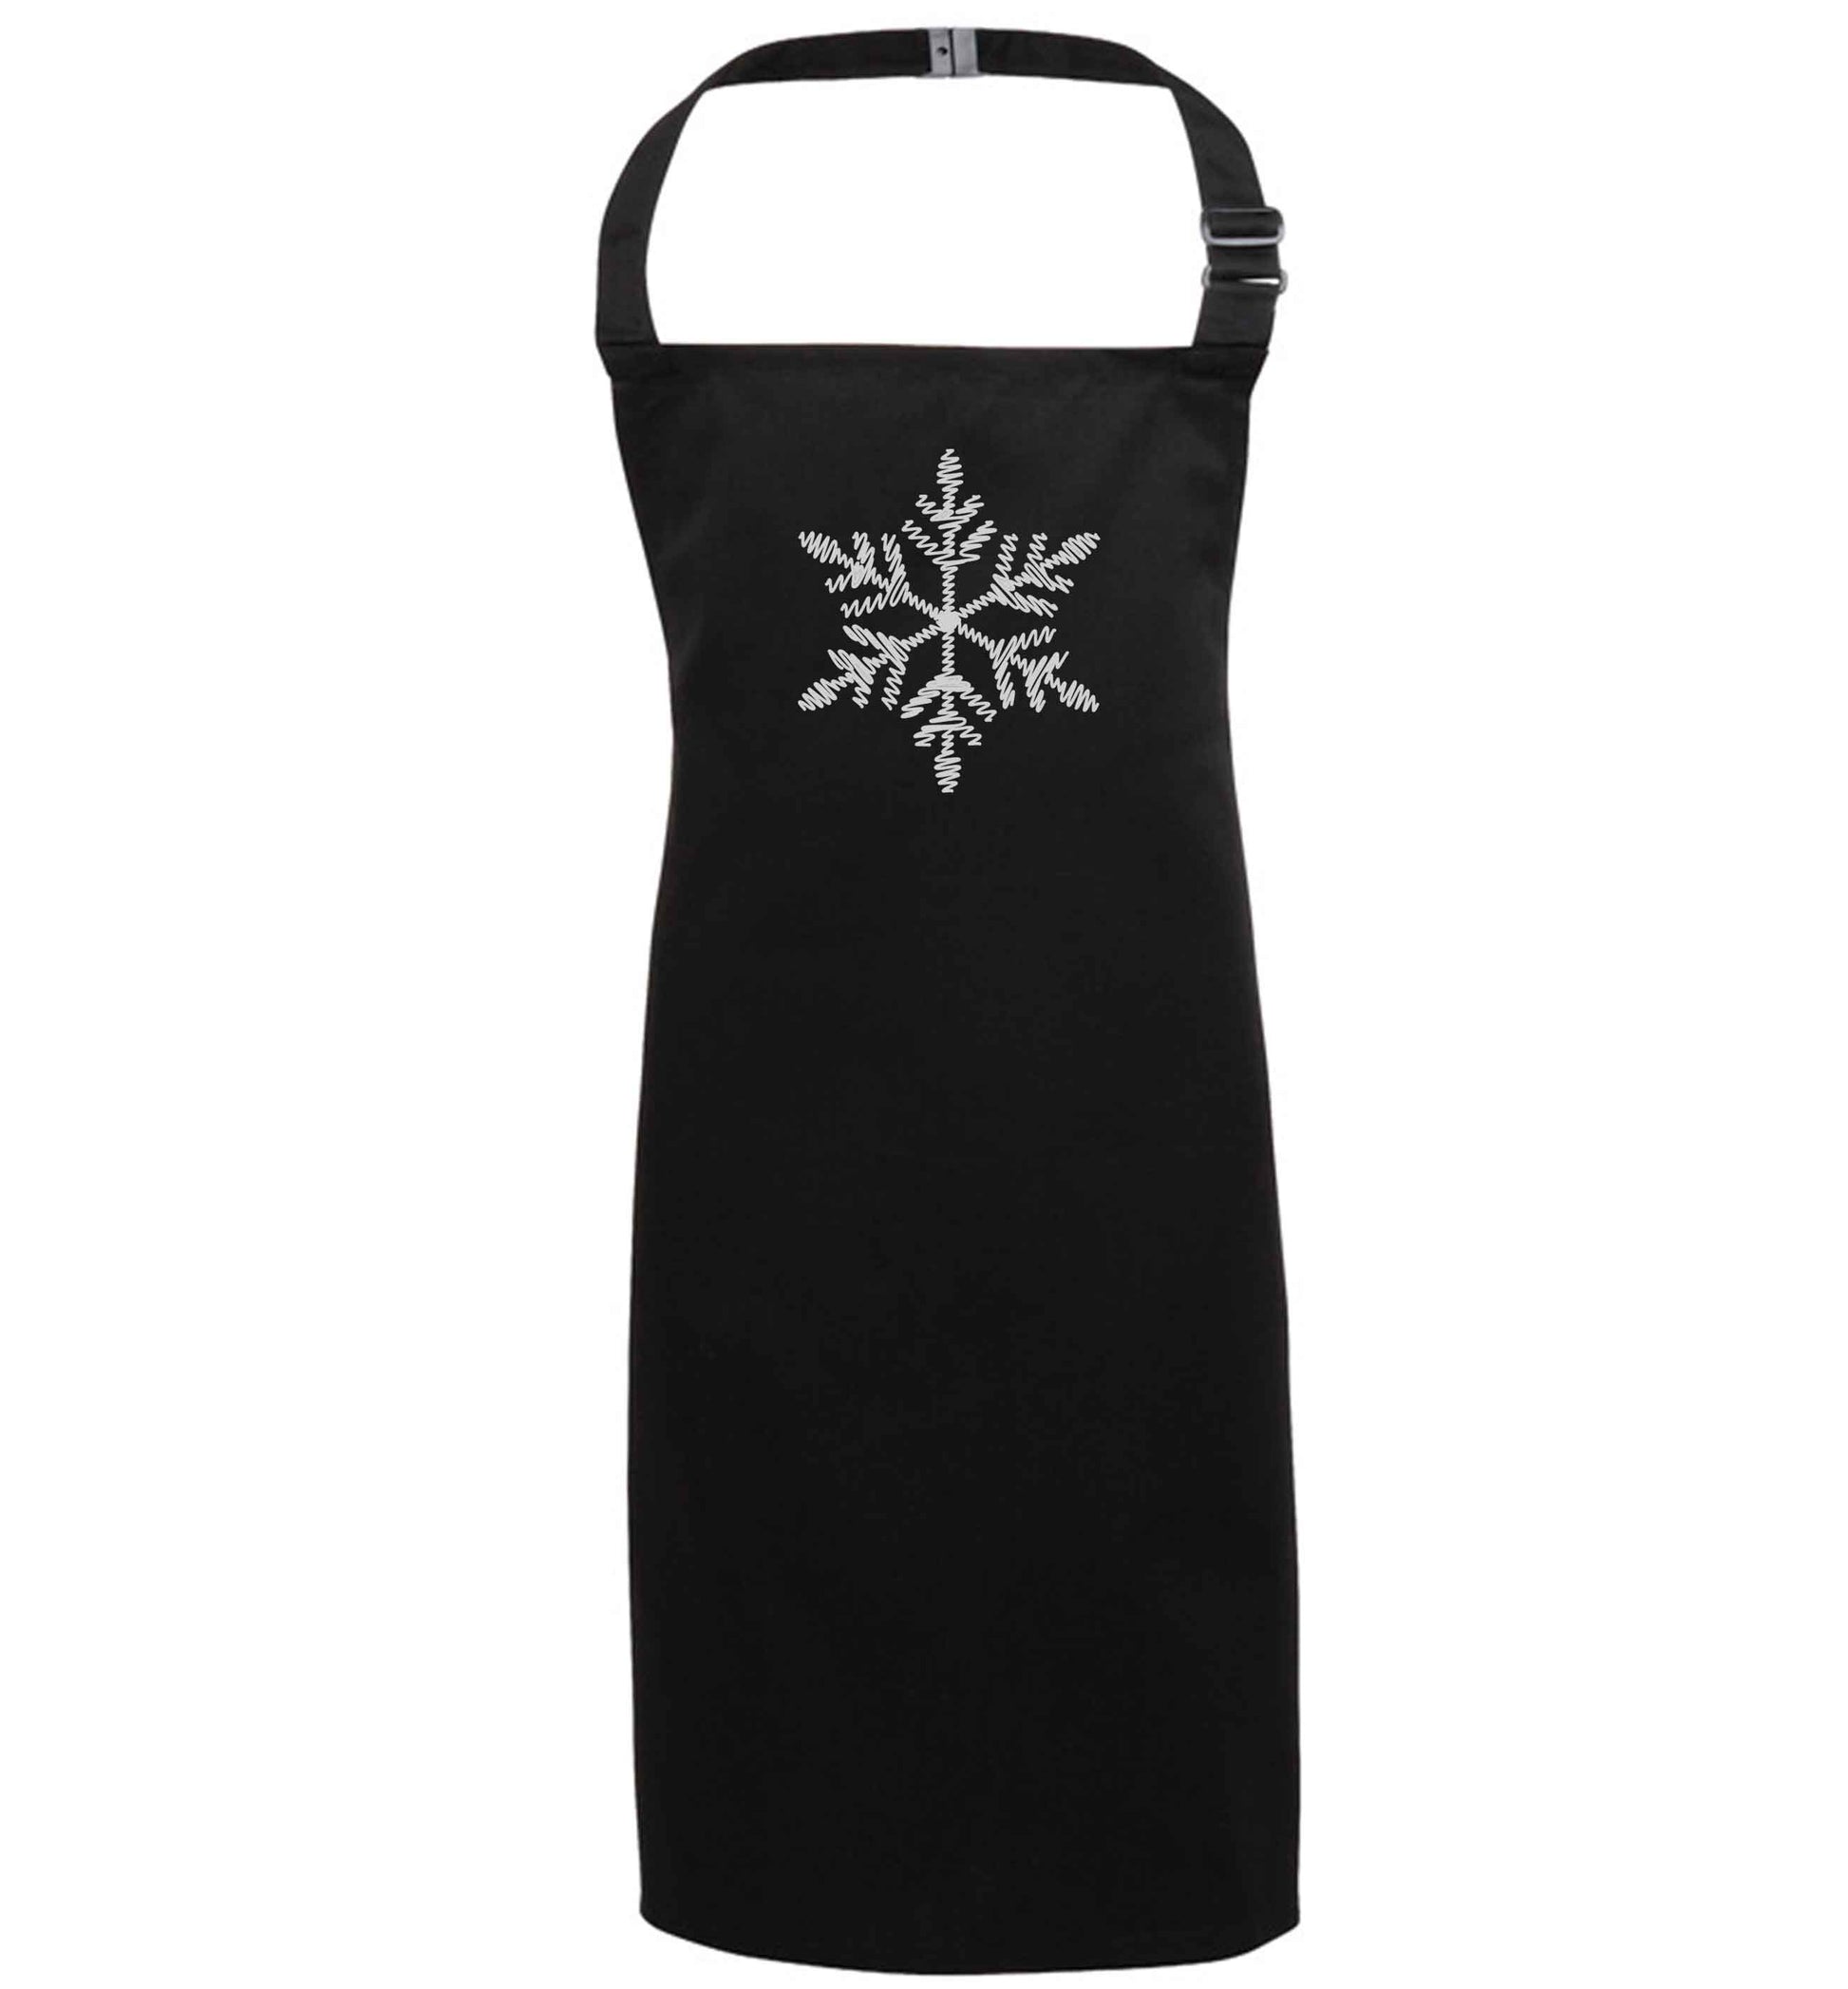 Snowflake black apron 7-10 years